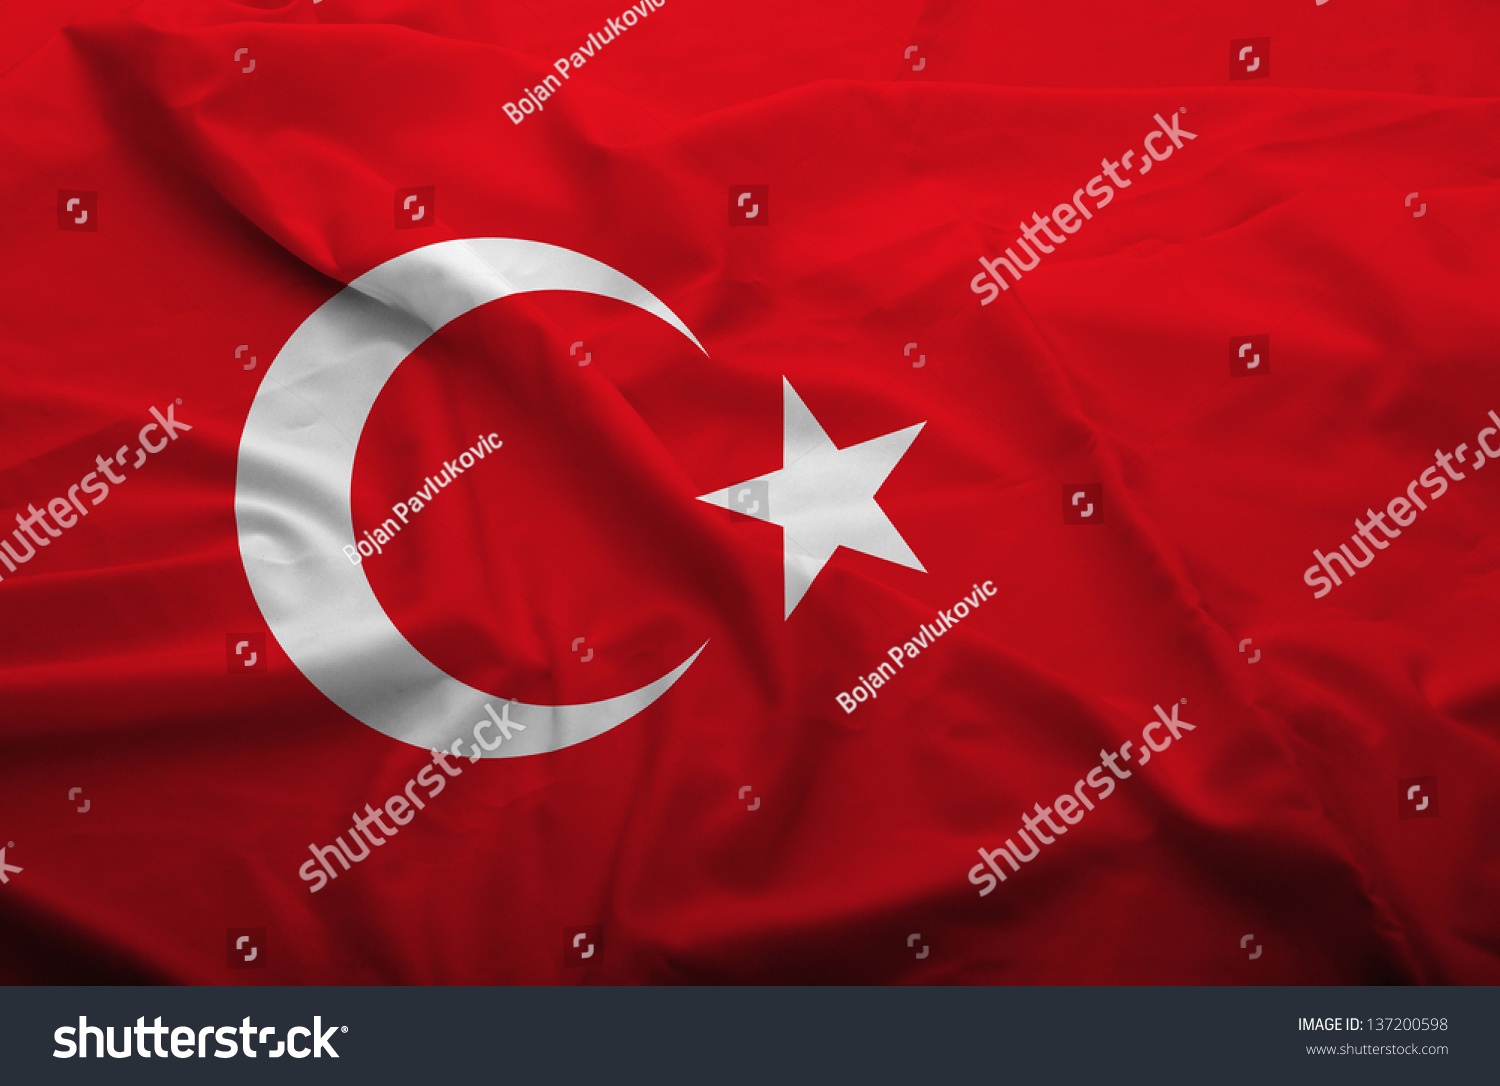 Waving Flag Turkey Flag Has Real Stock Photo 137200598 | Shutterstock